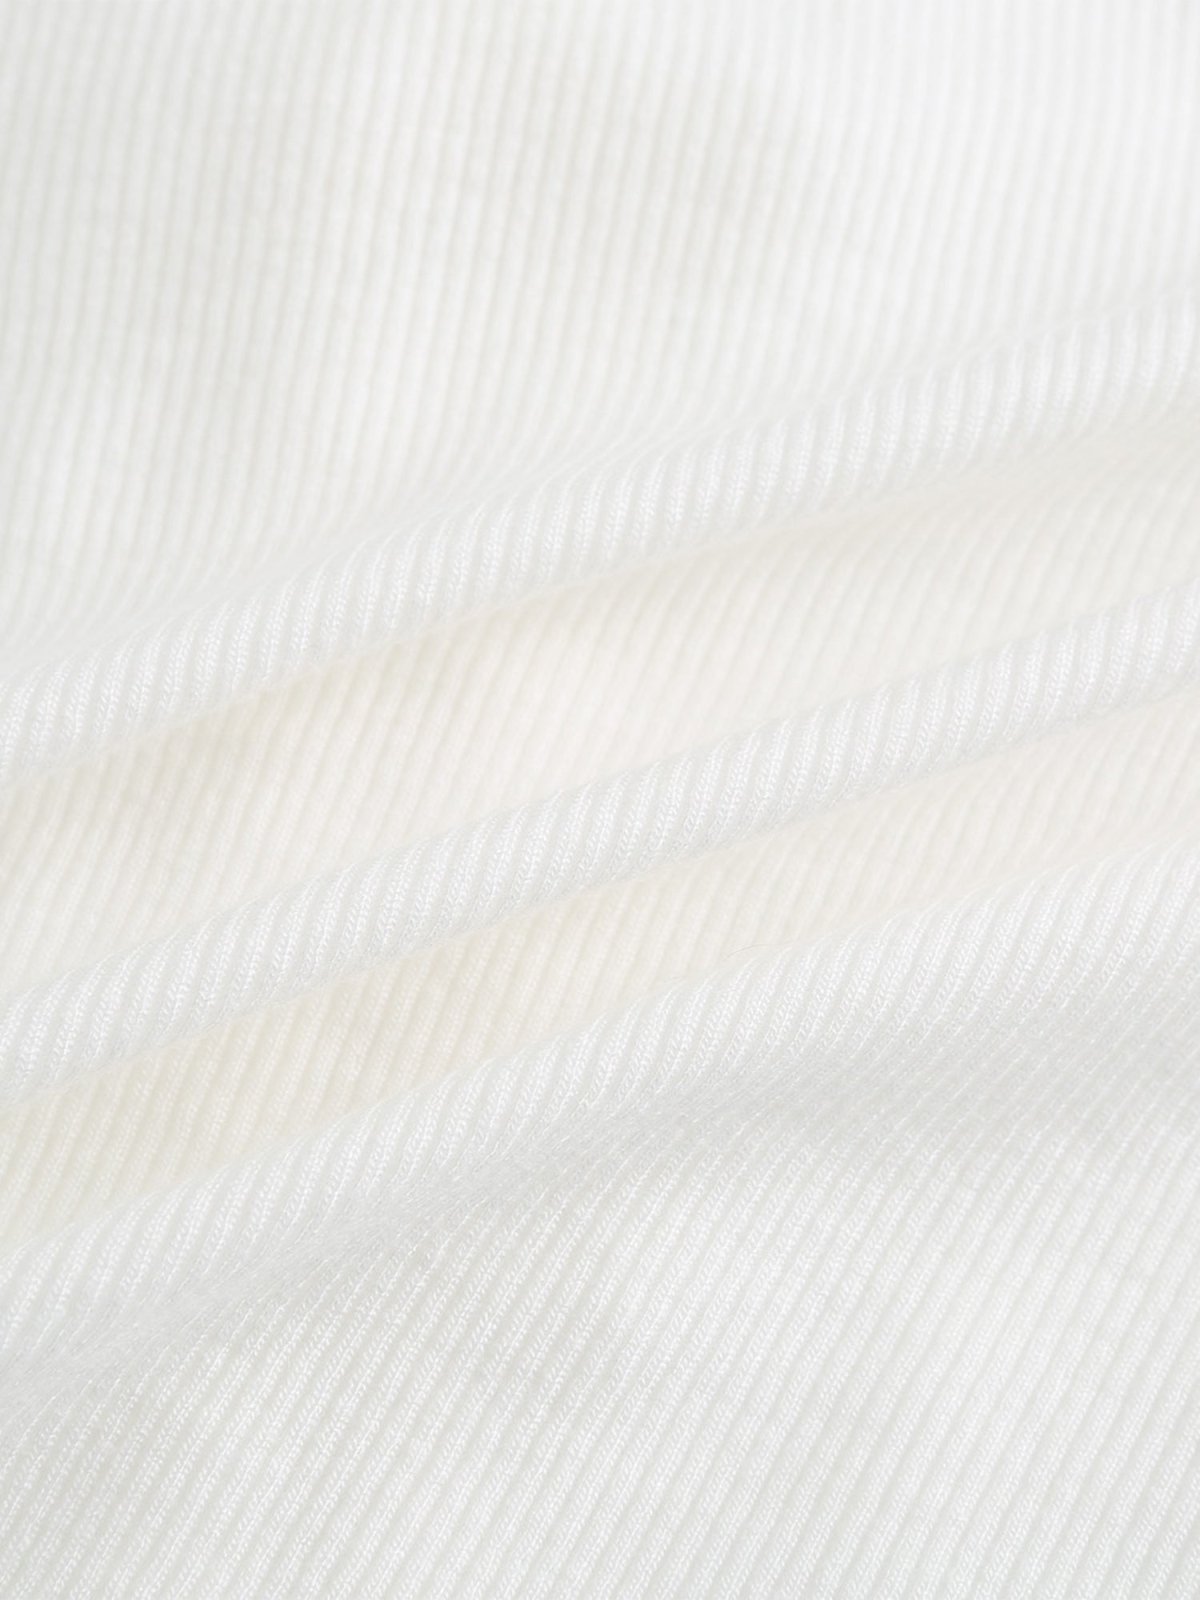 Quinn Shirring Tie Front Top - DAG-8-9593-22MarshmallowWhiteF - Marshmallow White - F - D'ZAGE Designs